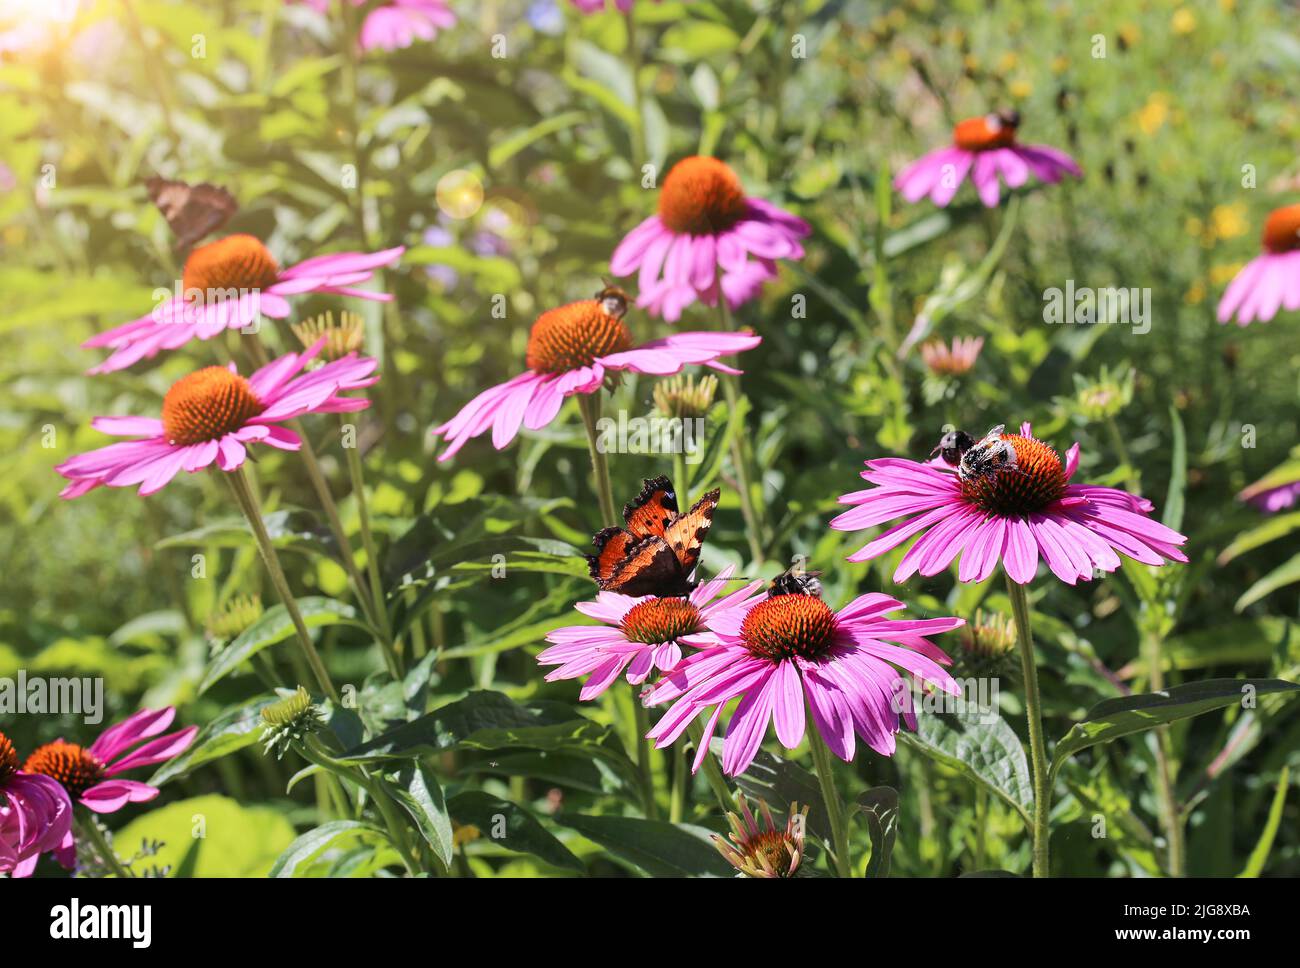 Echinacea flowers for alternative medicine Stock Photo